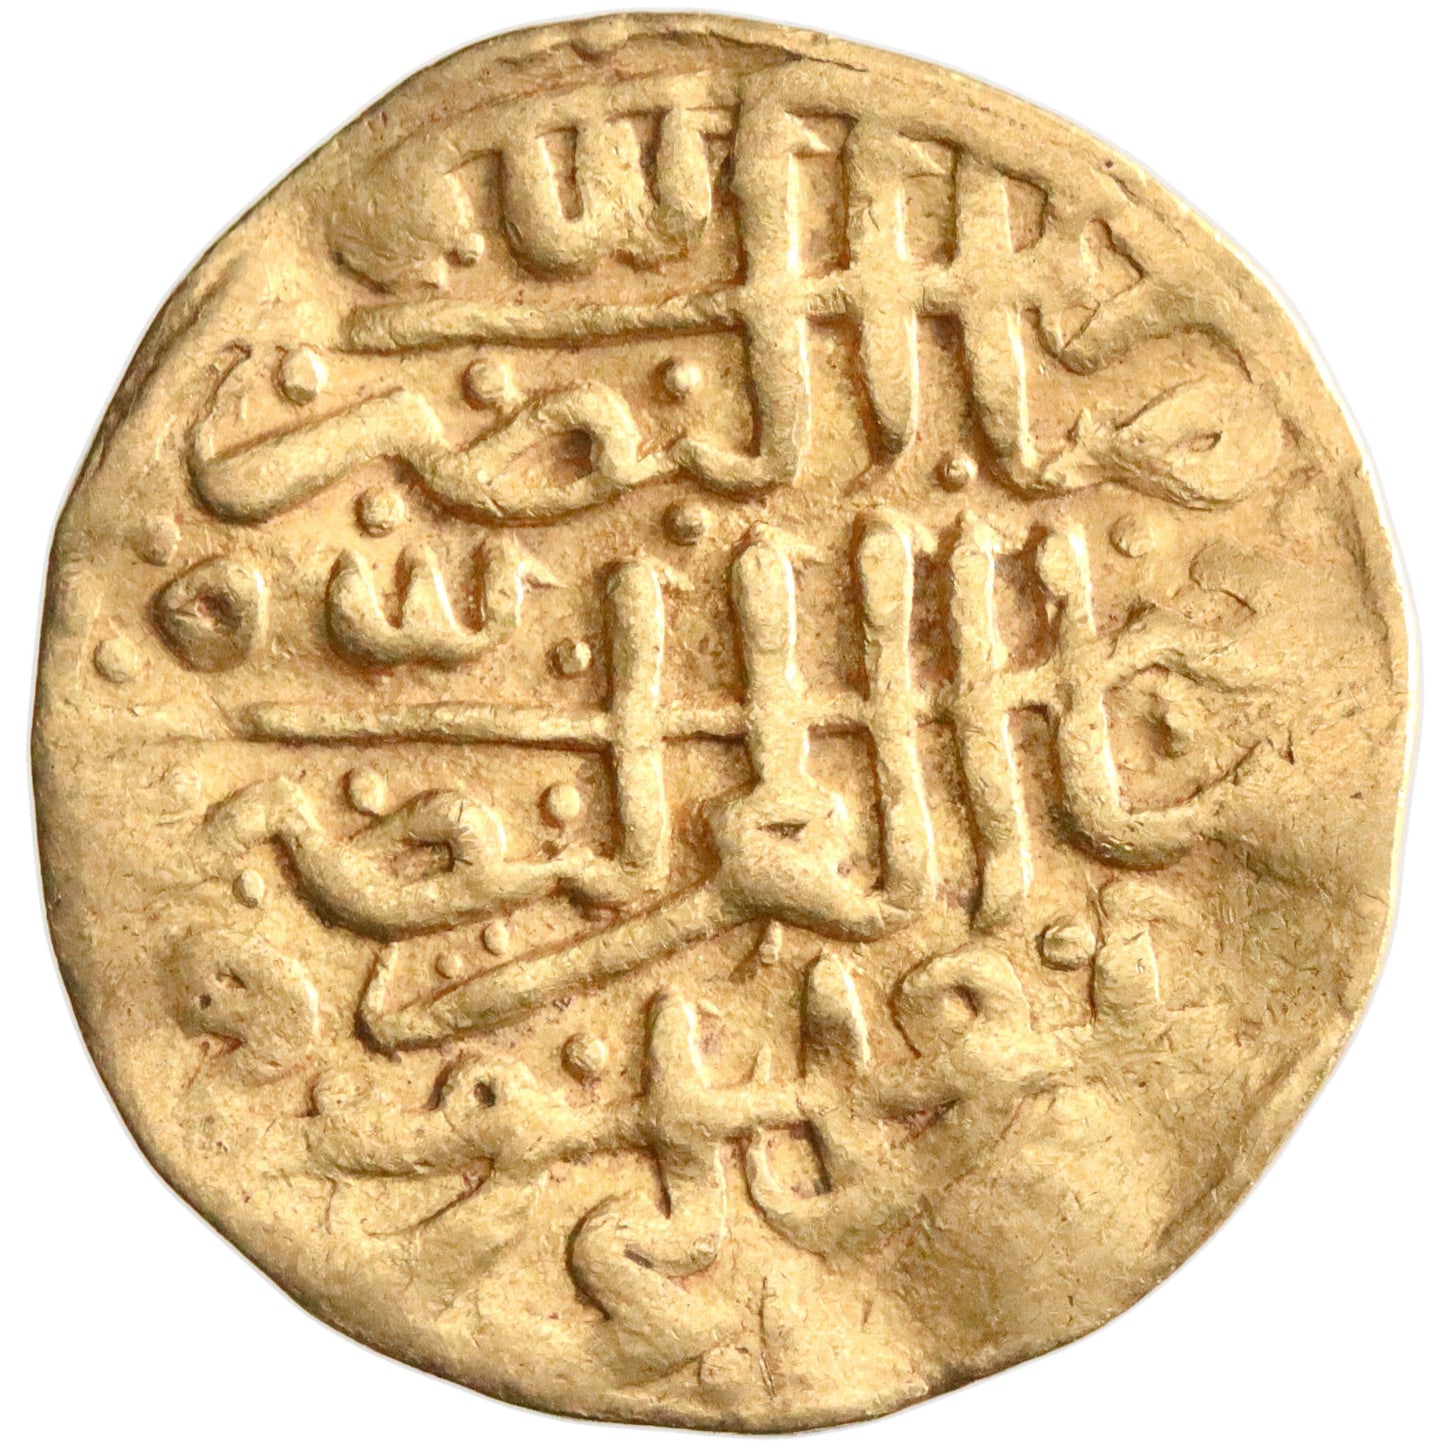 Ottoman, Suleyman I, gold sultani, Misr (Egypt) mint, AH 926